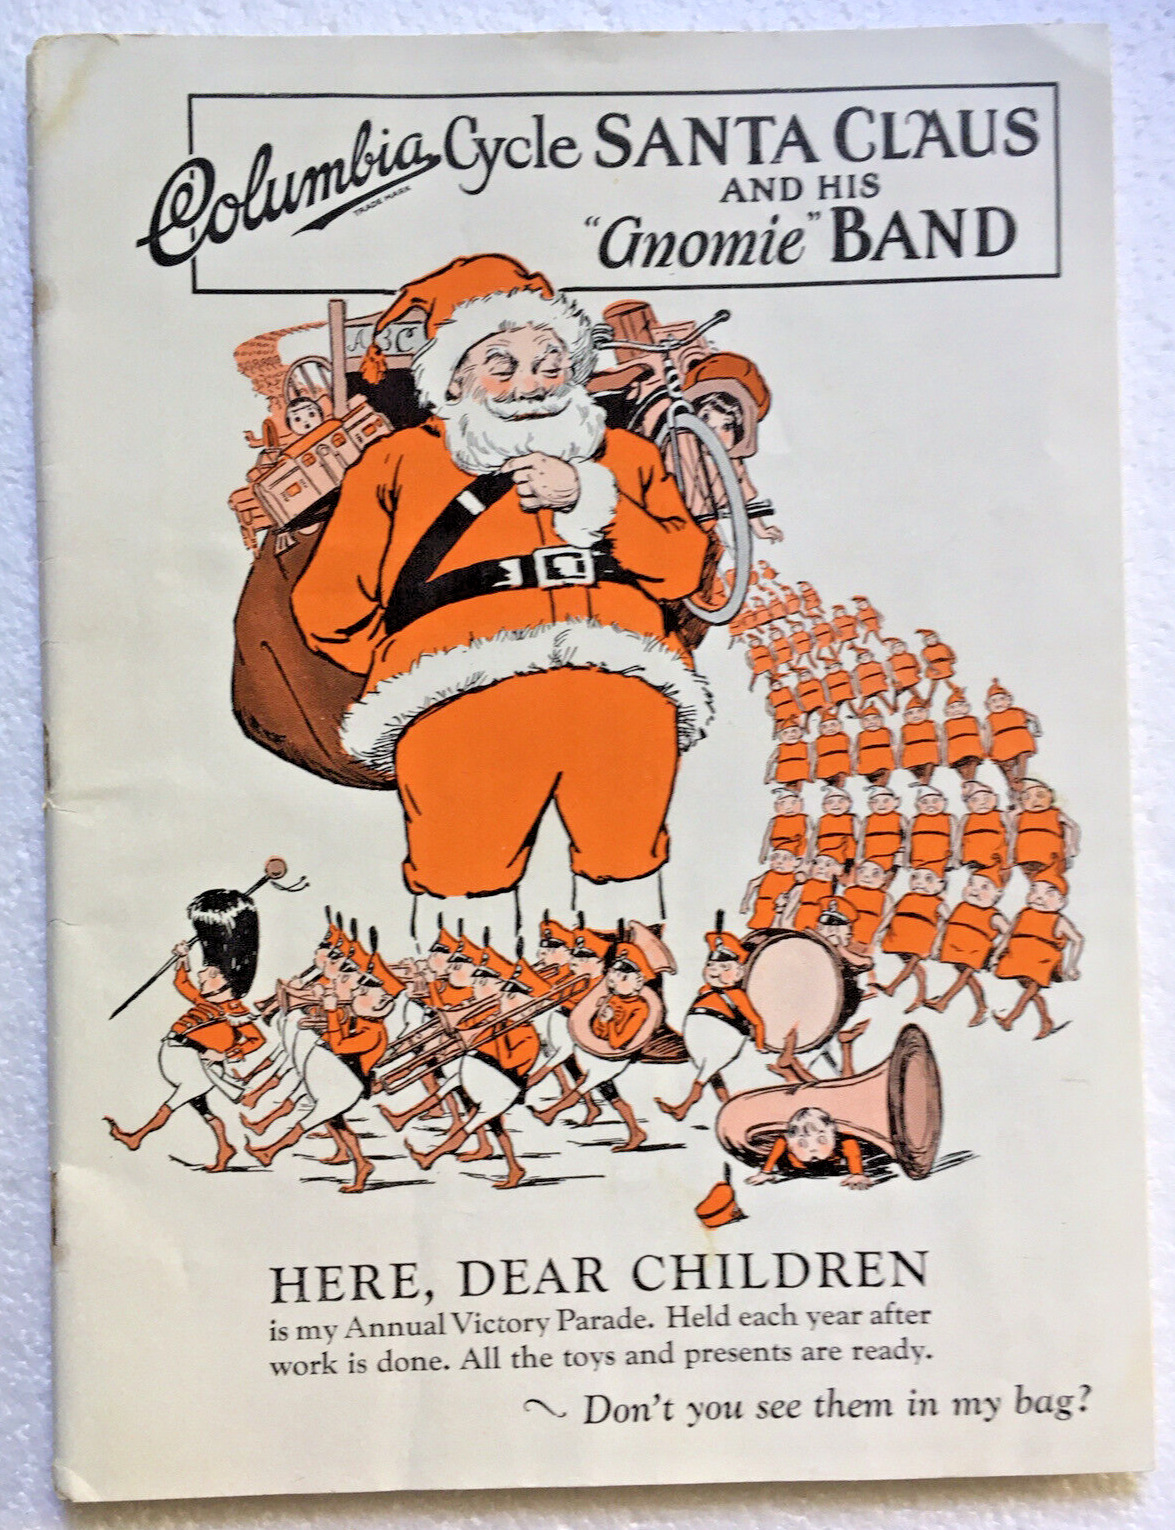 Original Vintage 1927 Columbia Cycle Santa Claus And His Gnomie Band Booklet